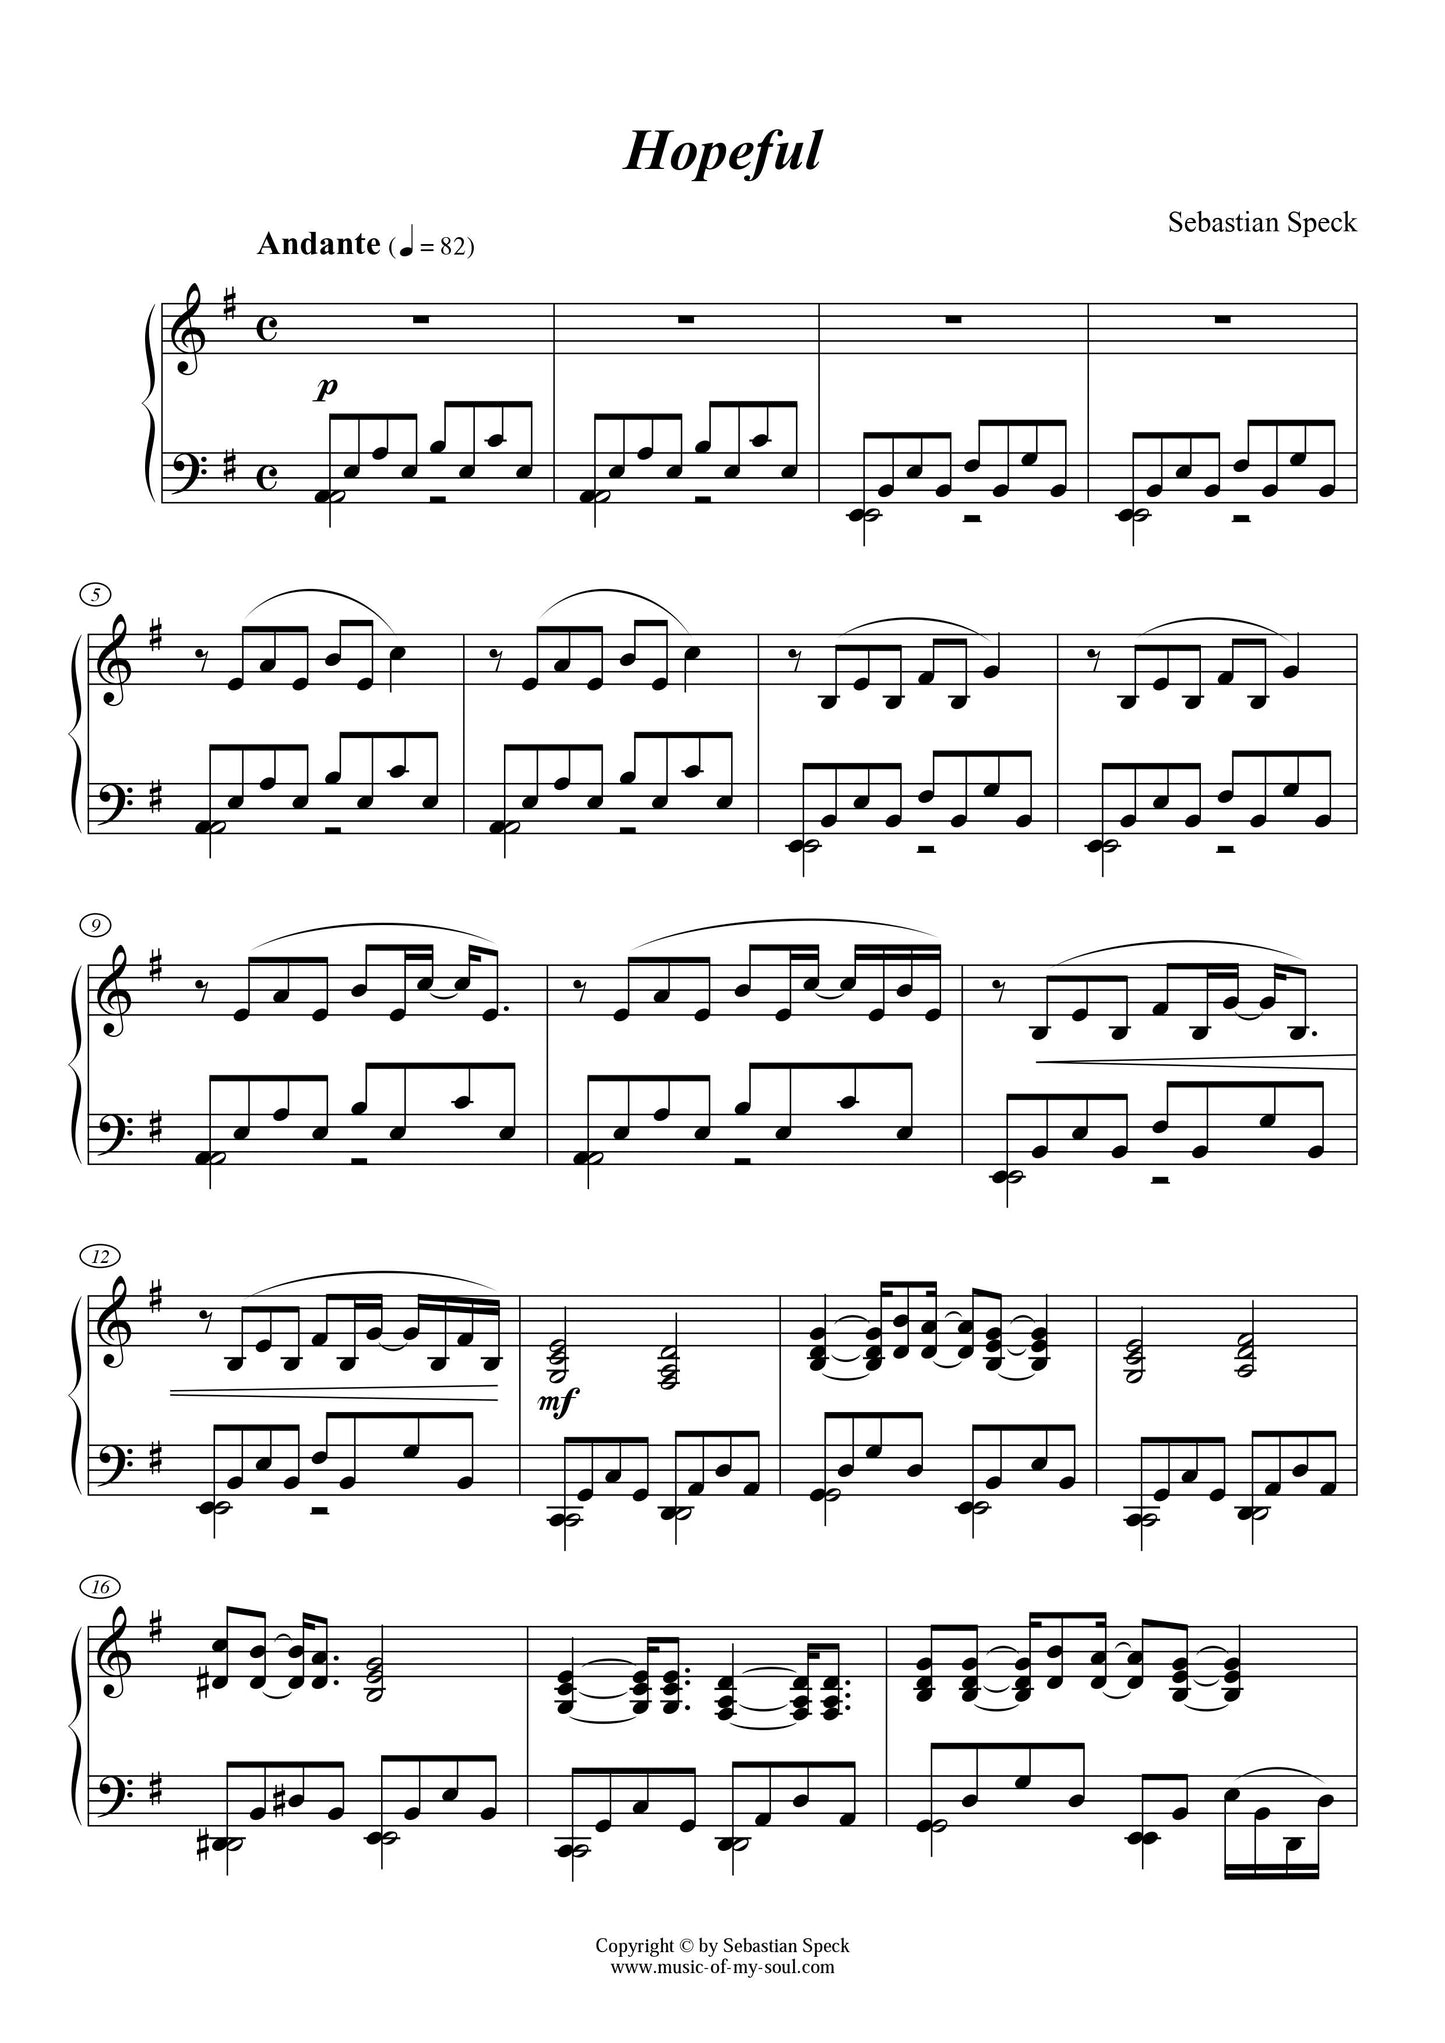 Hopeful Piano Sheet Music